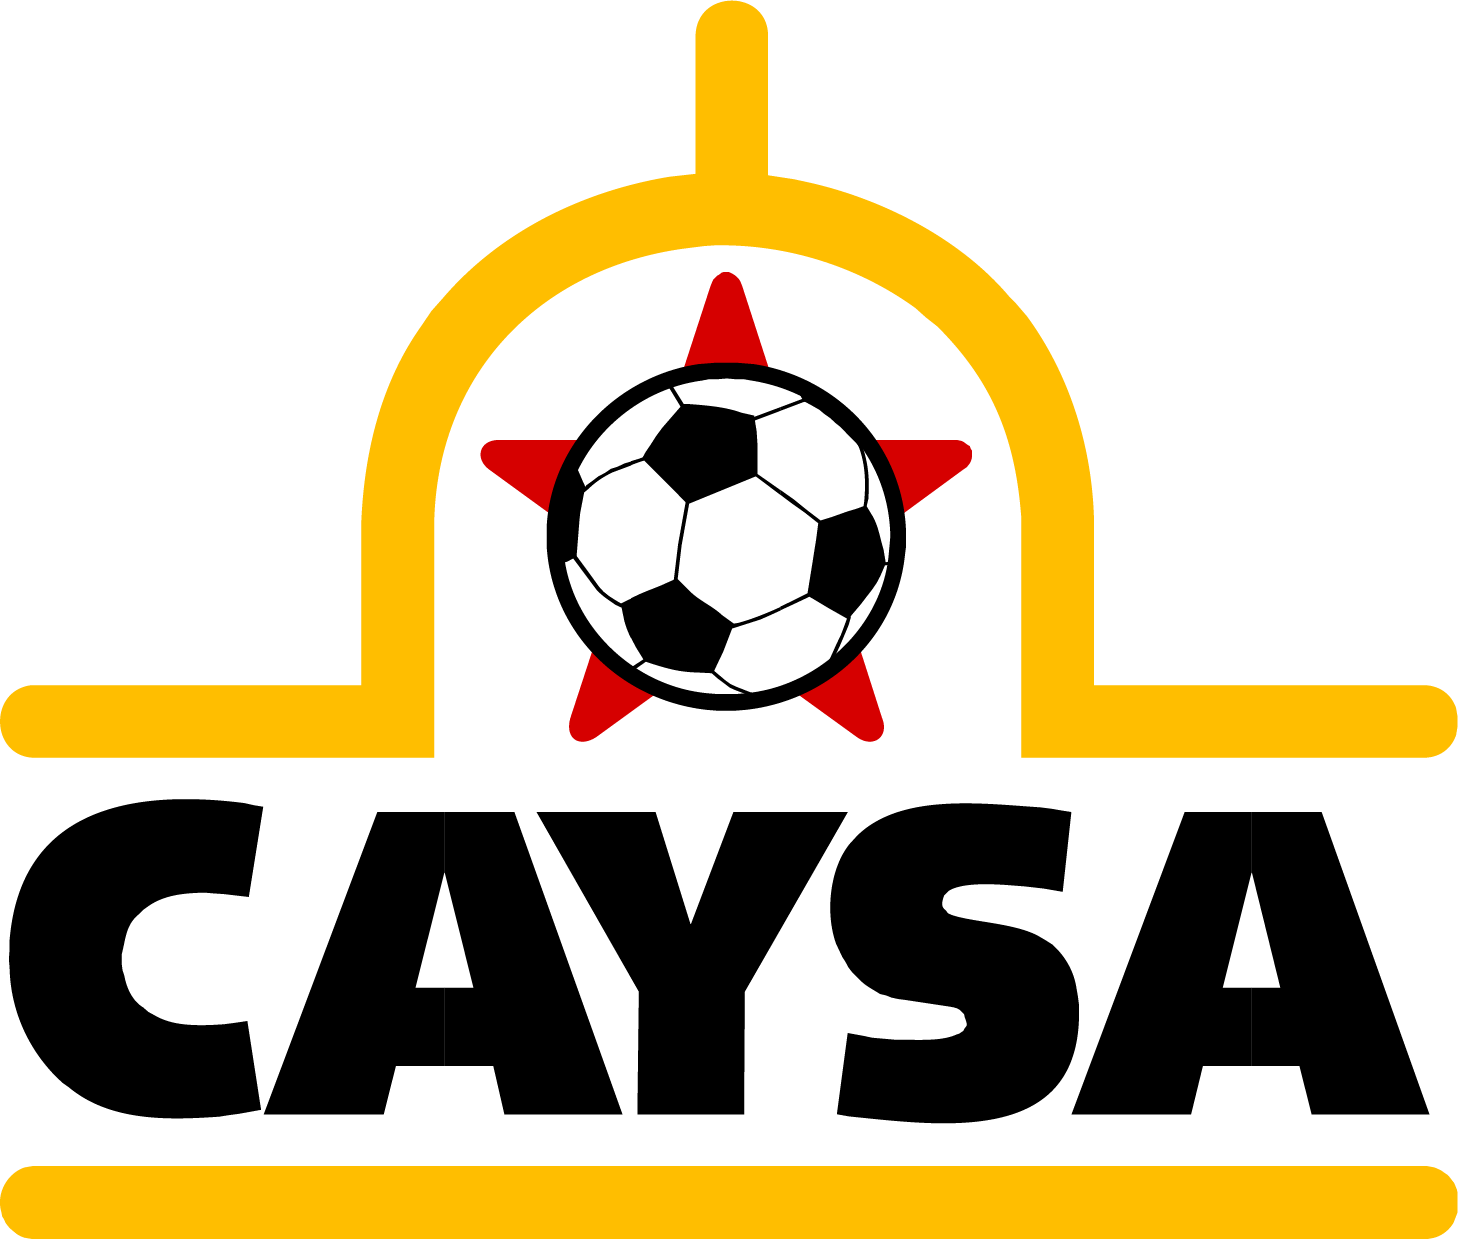 Capital Area Youth Soccer Association